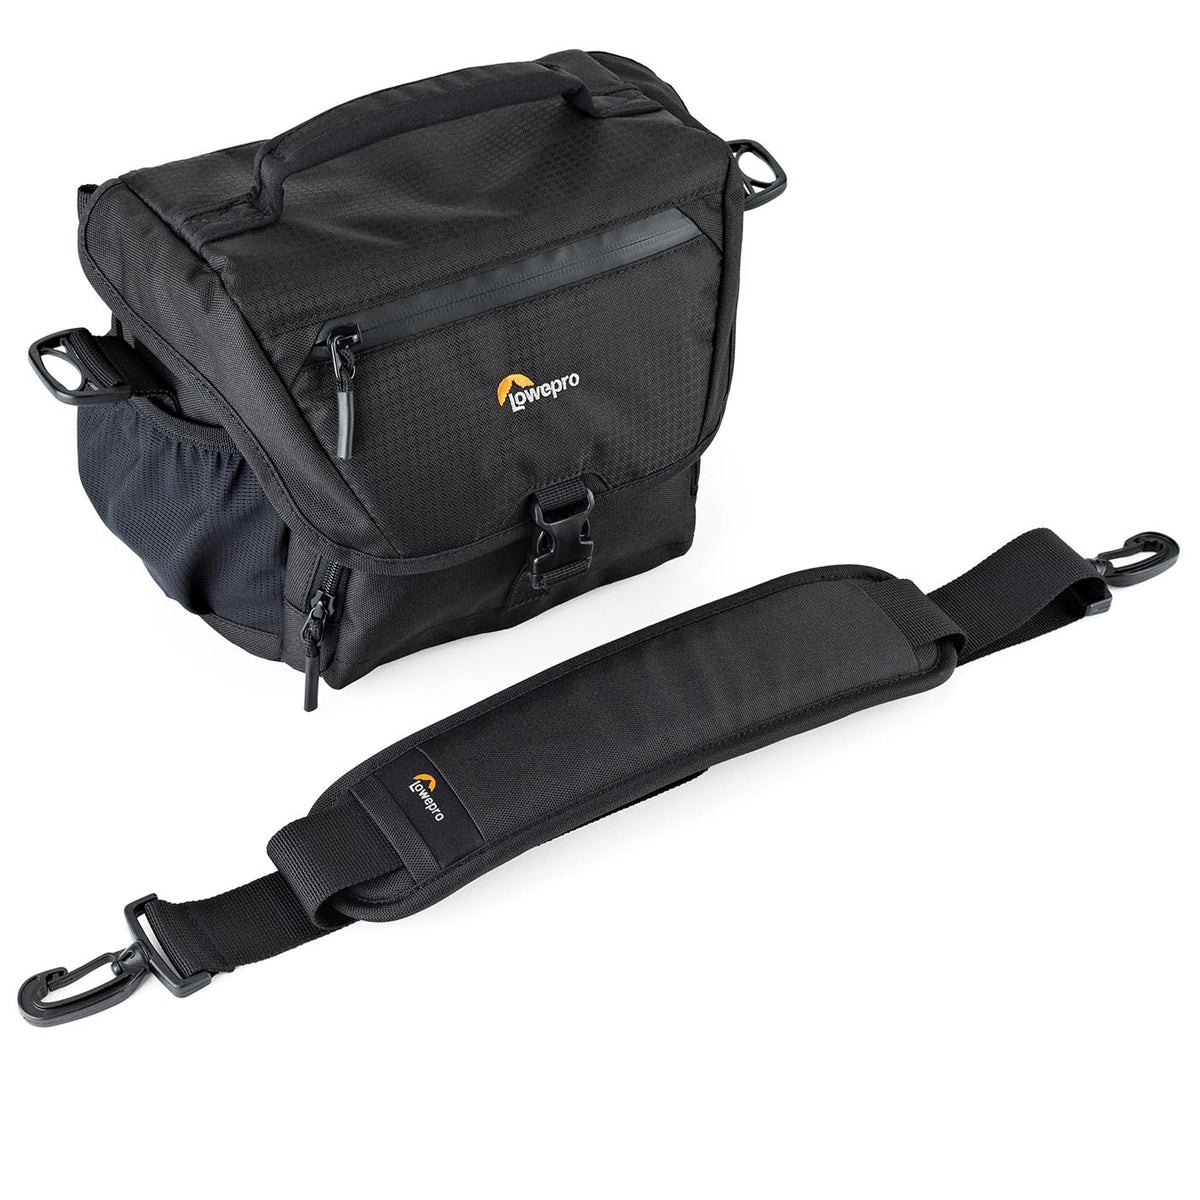 Lowepro Nova SH 160 AW II Camera Shoulder Bag (Black)